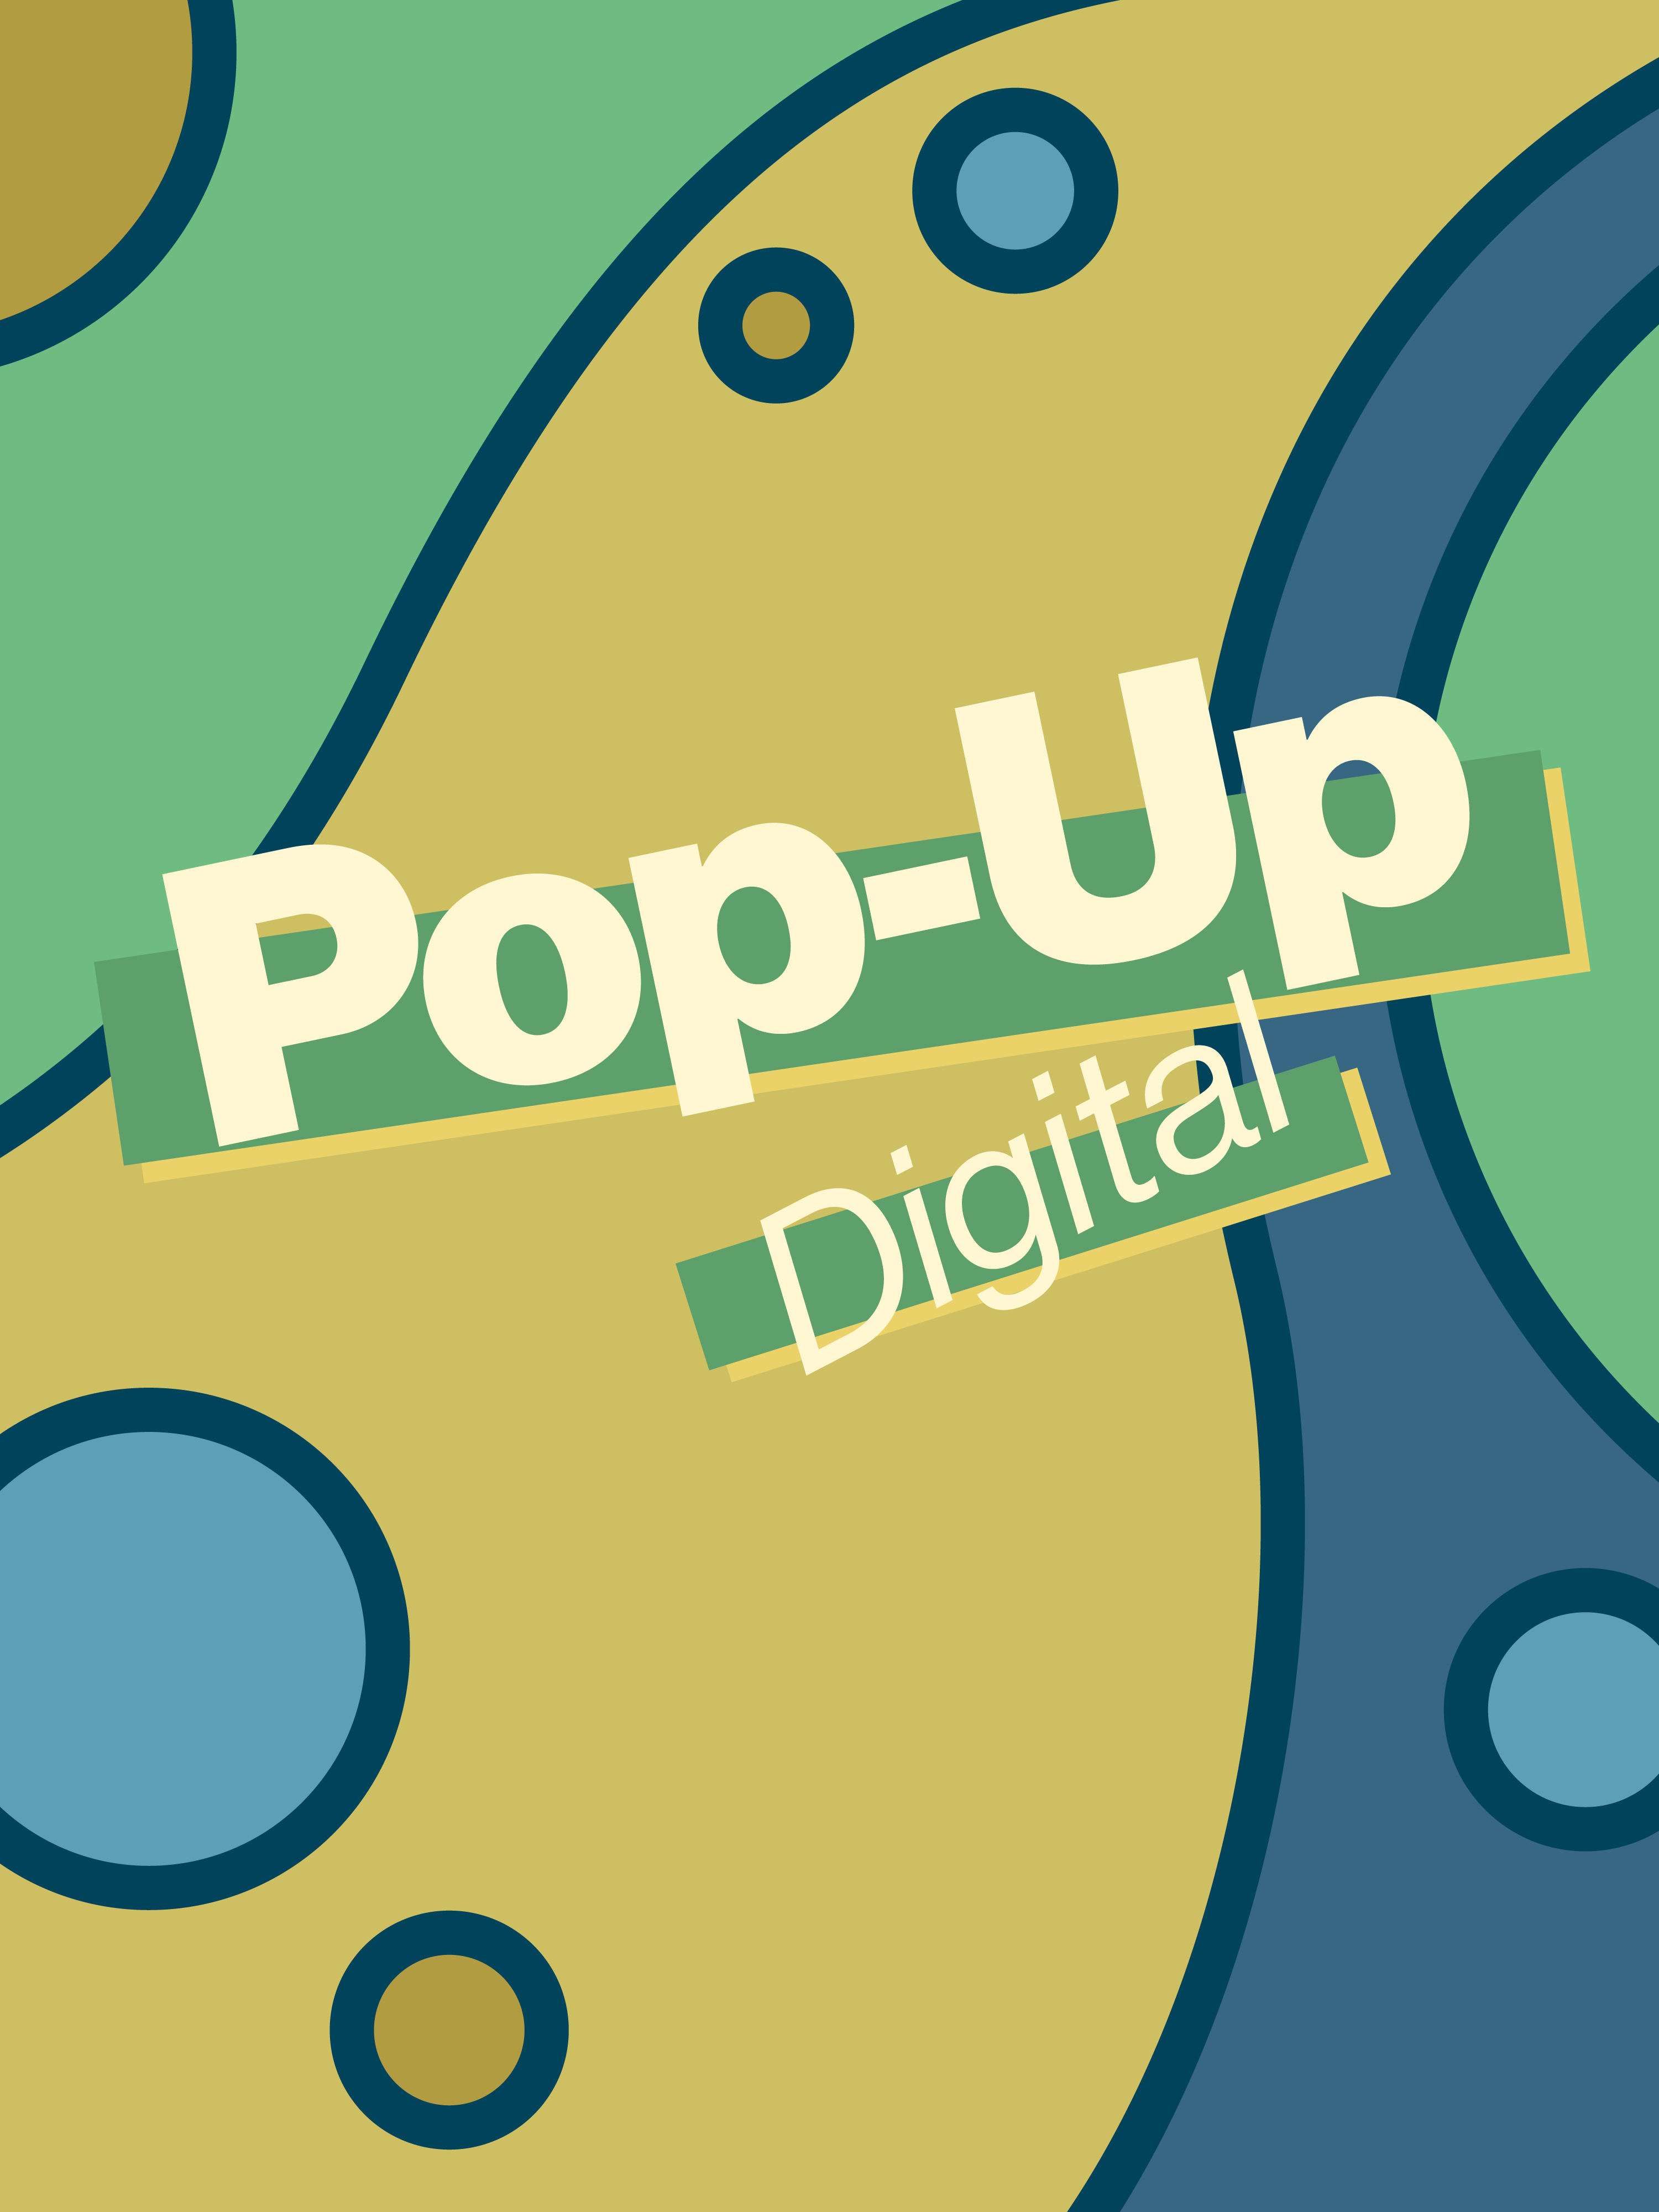 Pop-Up Digital exhibition poster